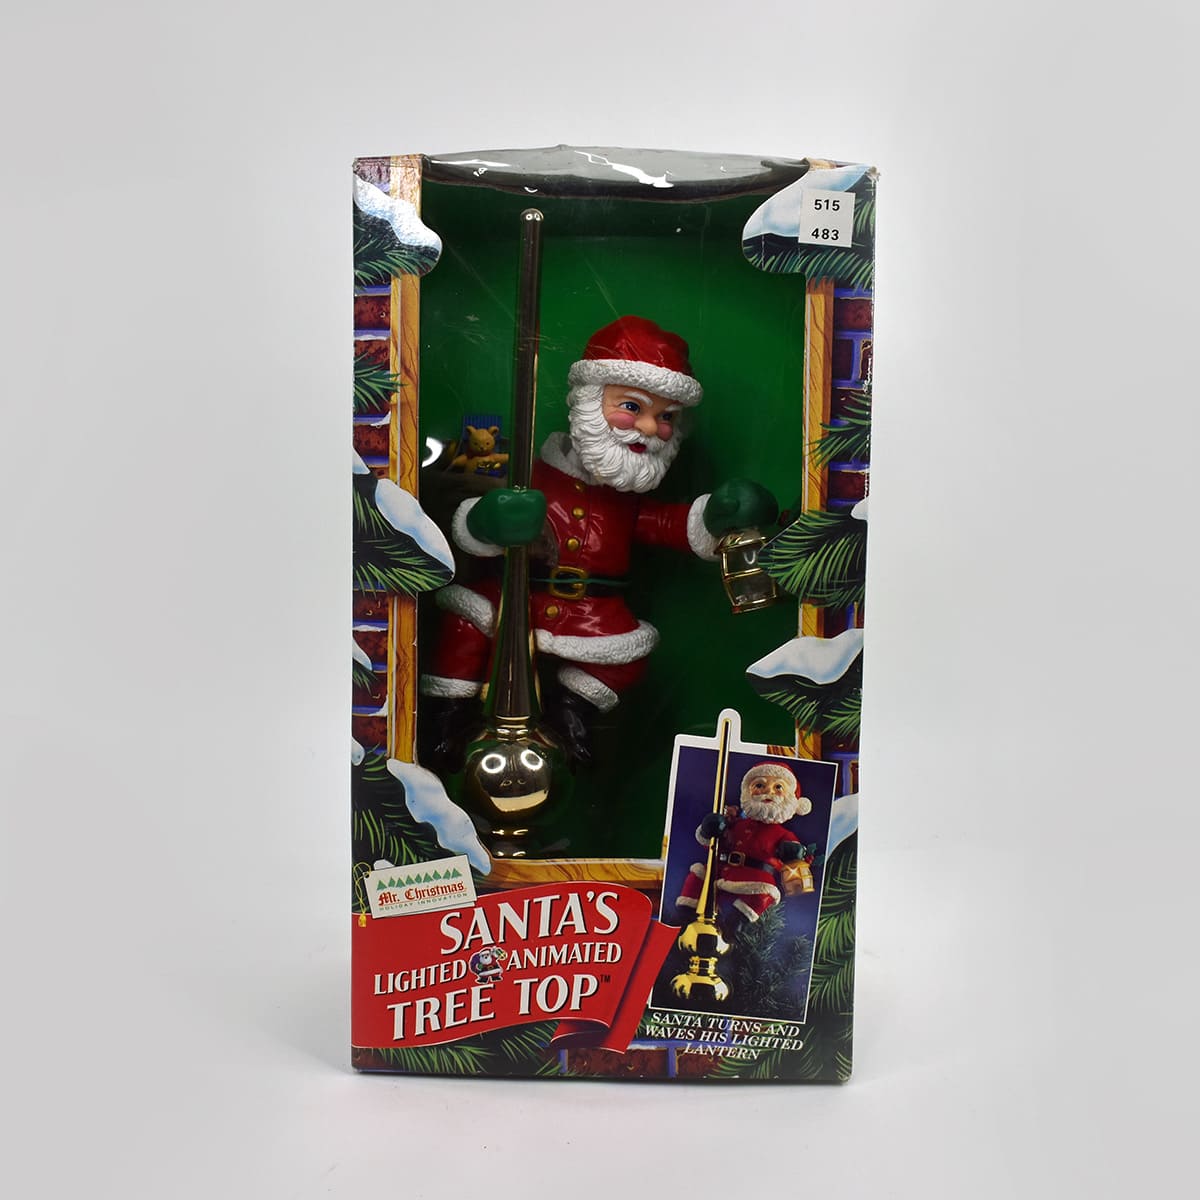 1994 Mr. Christmas Santa's Lighted Animated Tree Top